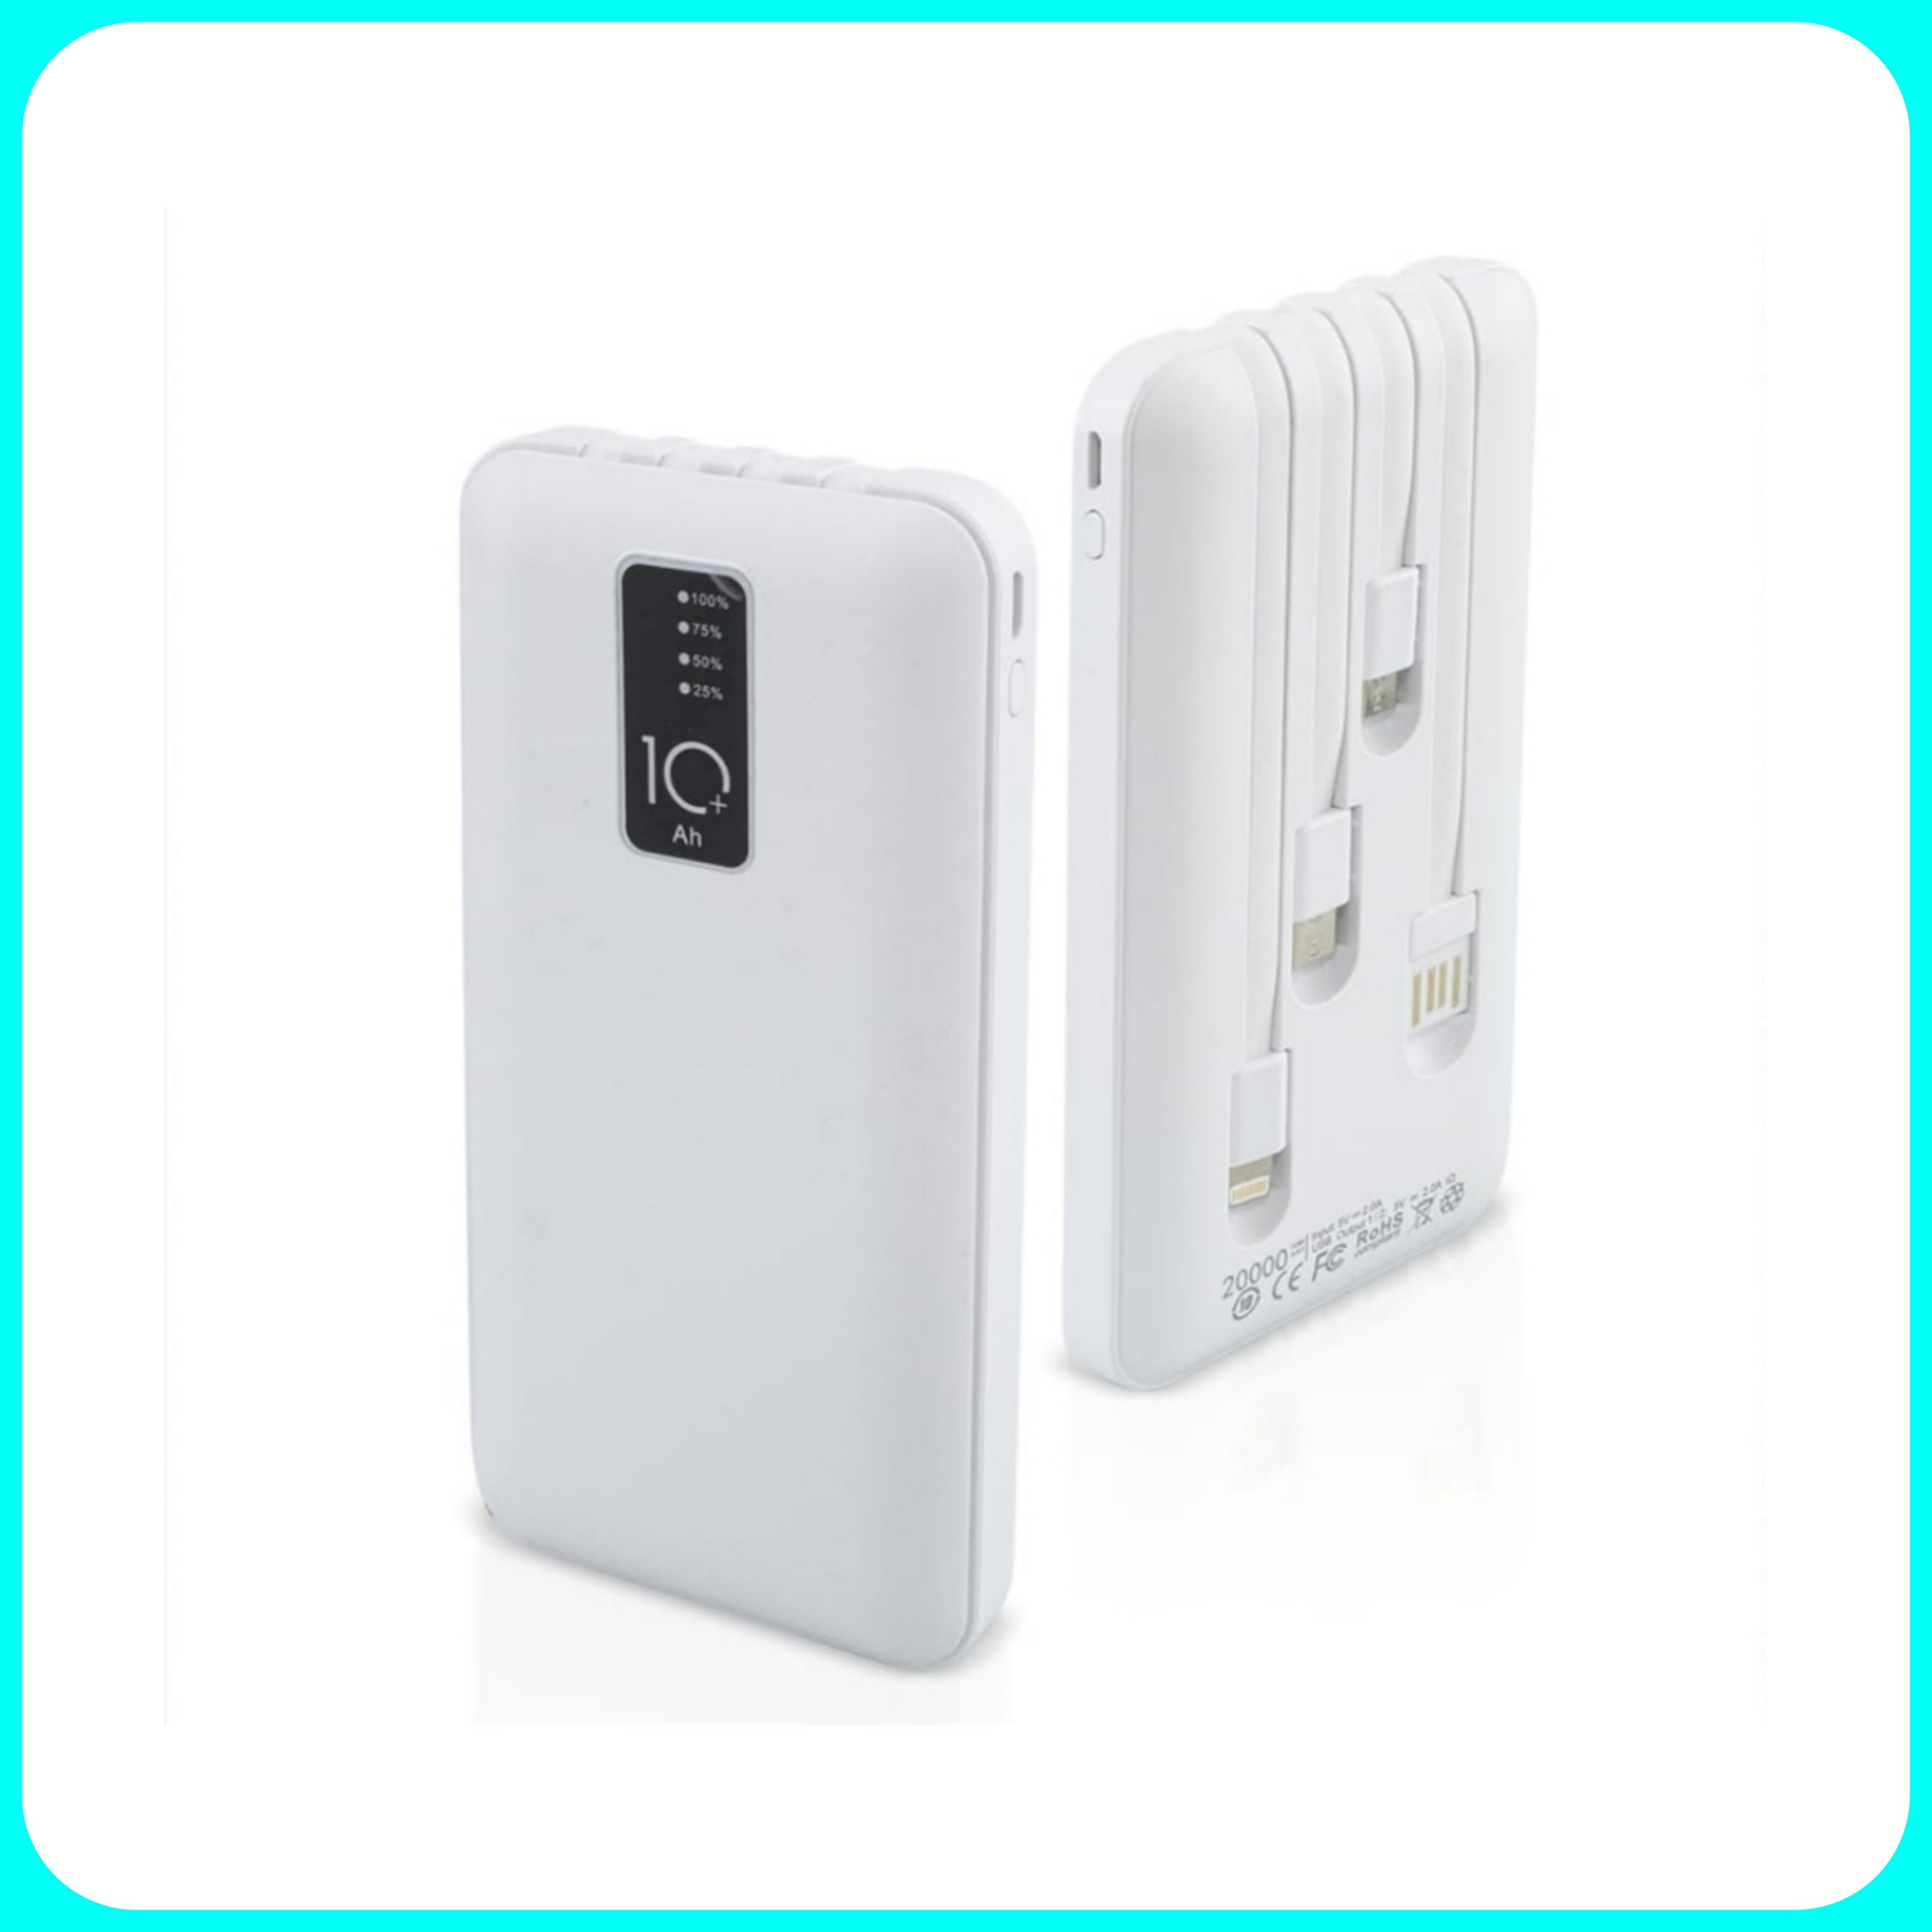 Powerbank Portatile - Caricabatterie 4 cavi di ricarica inclusi, Tascabile, Caricatore Portatile, tutti i Cellulari